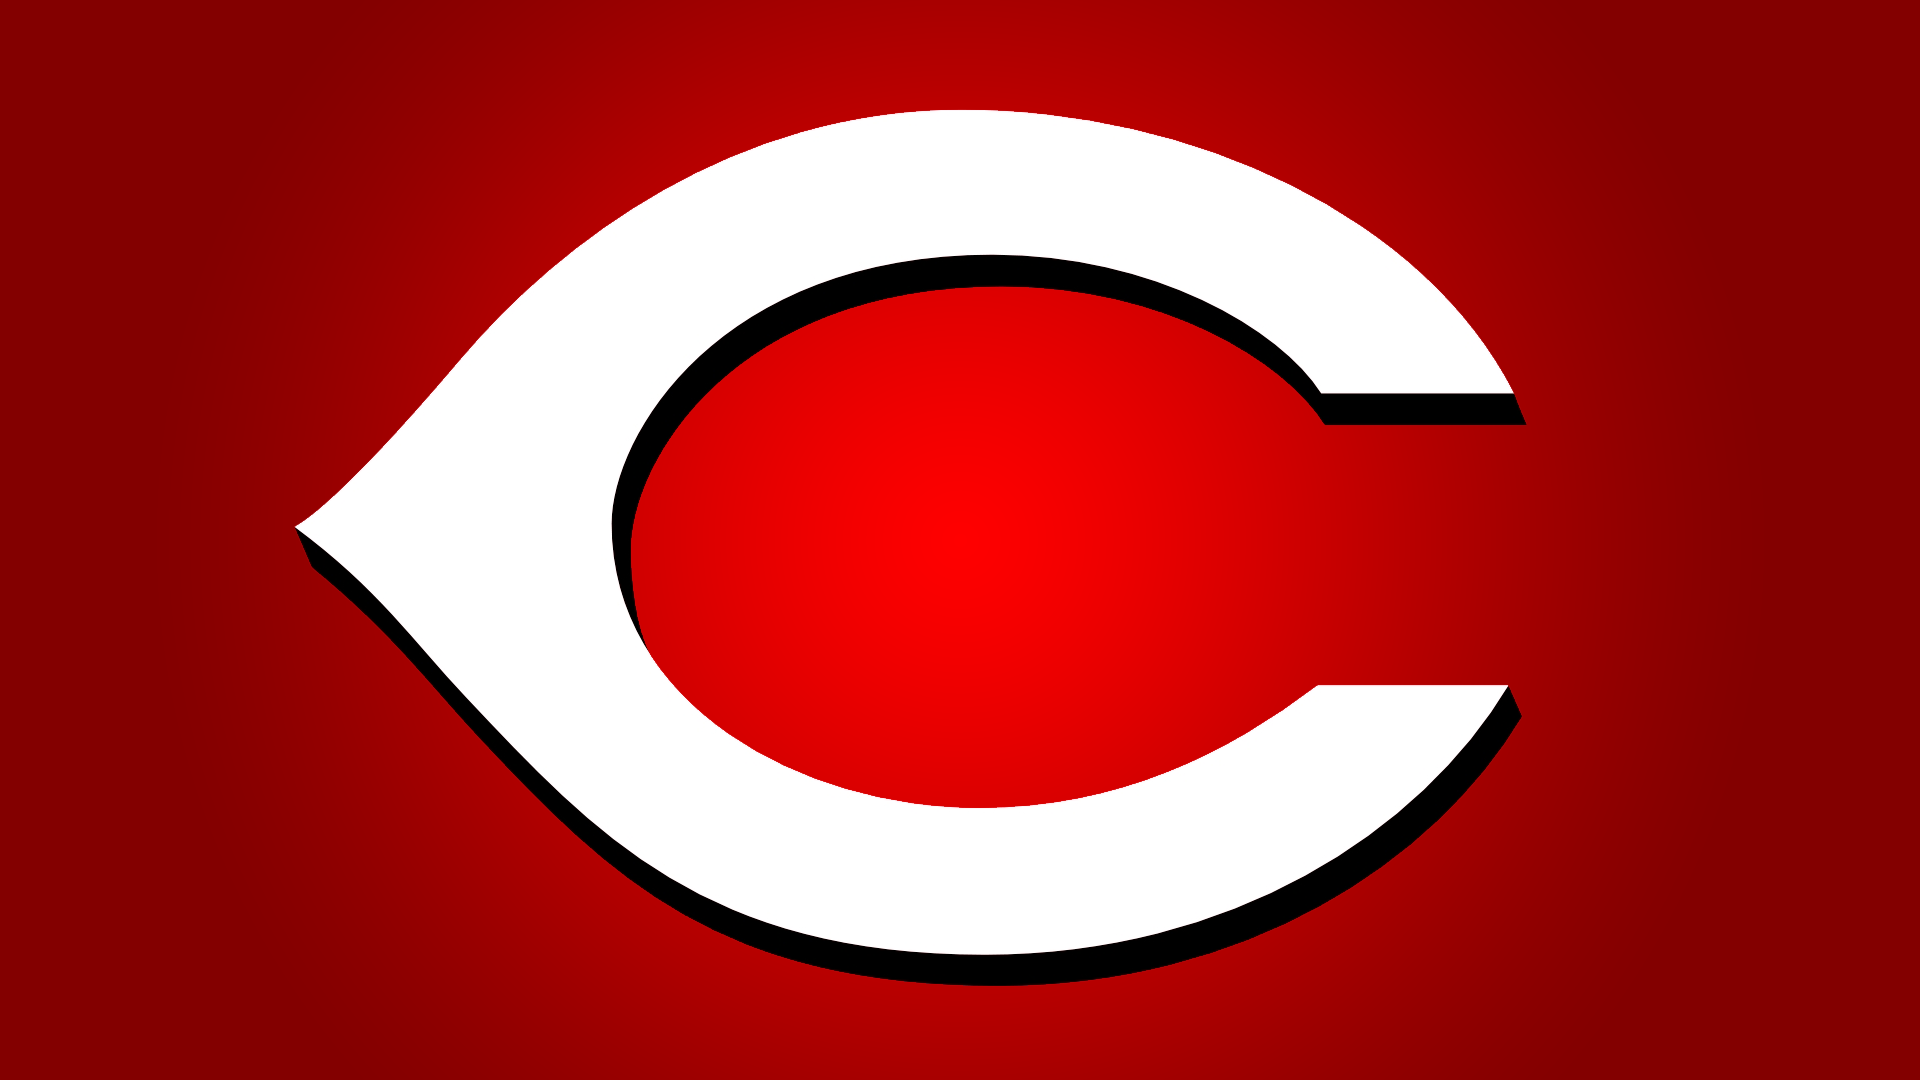 Cincinnati Reds Clip Art - ClipArt Best